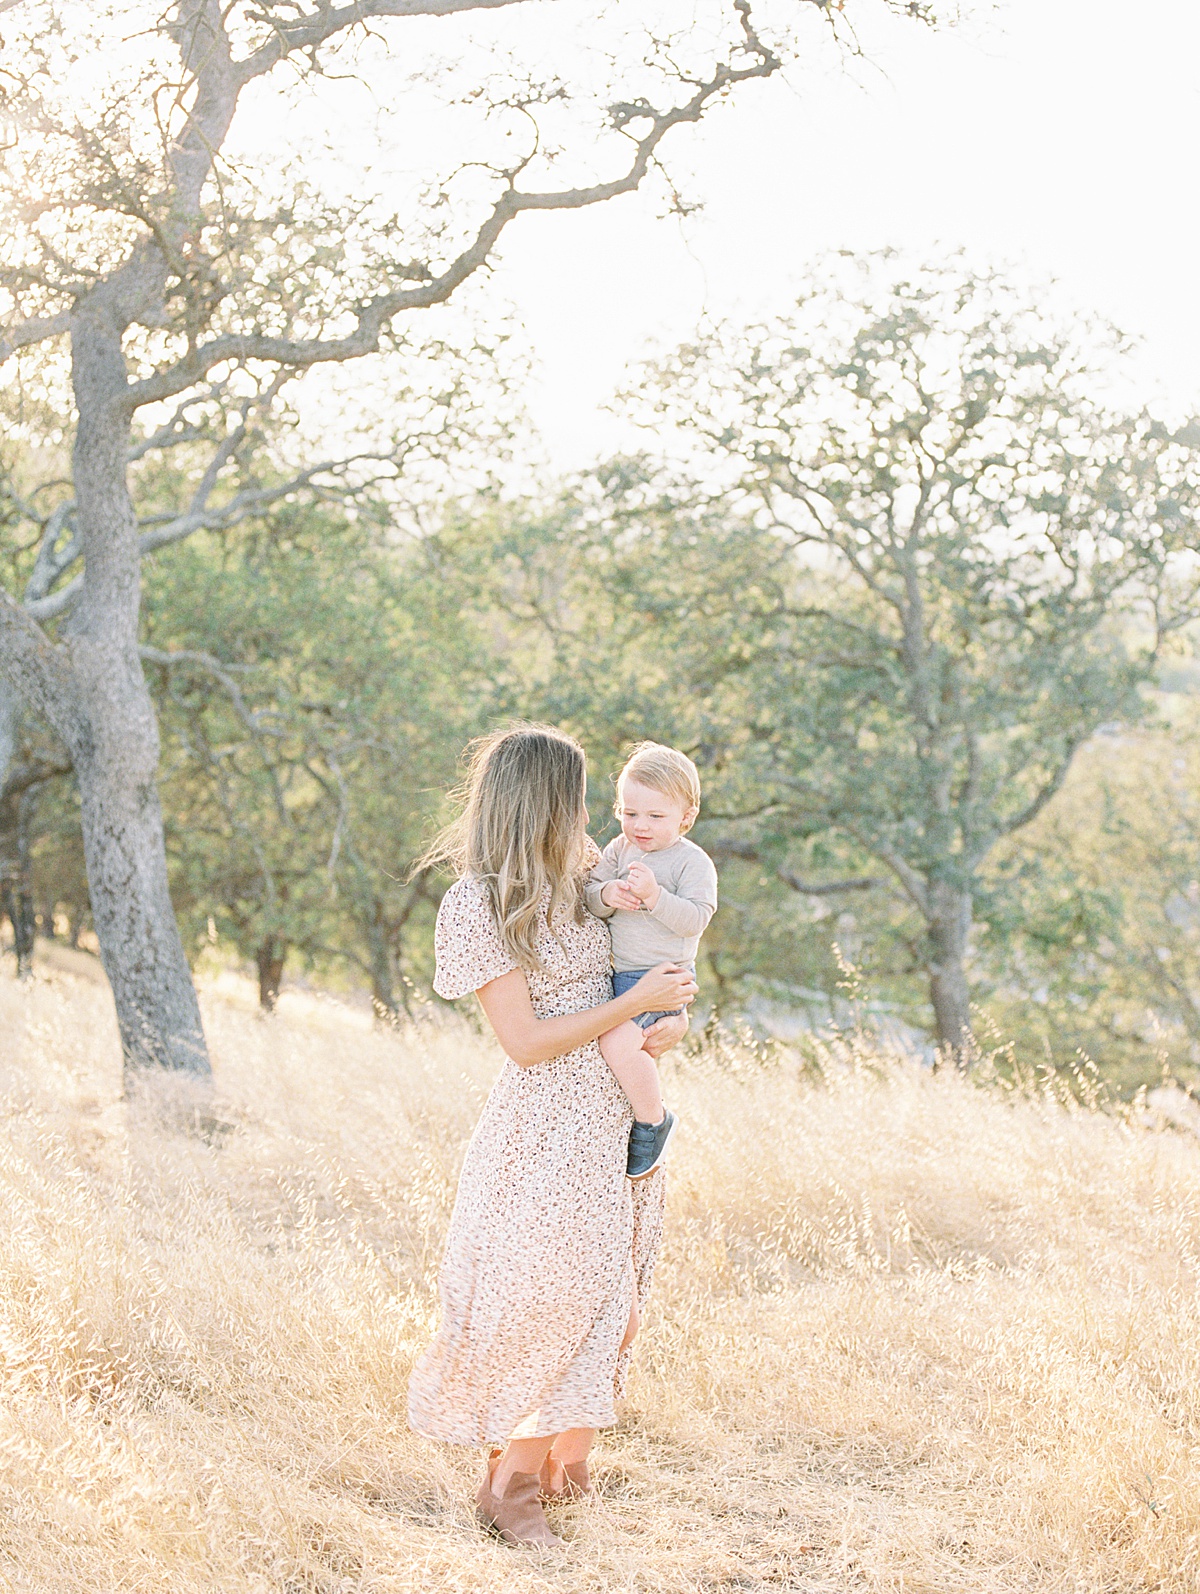 Amanda & Brian - Family Photoshoot | Almaden Valley